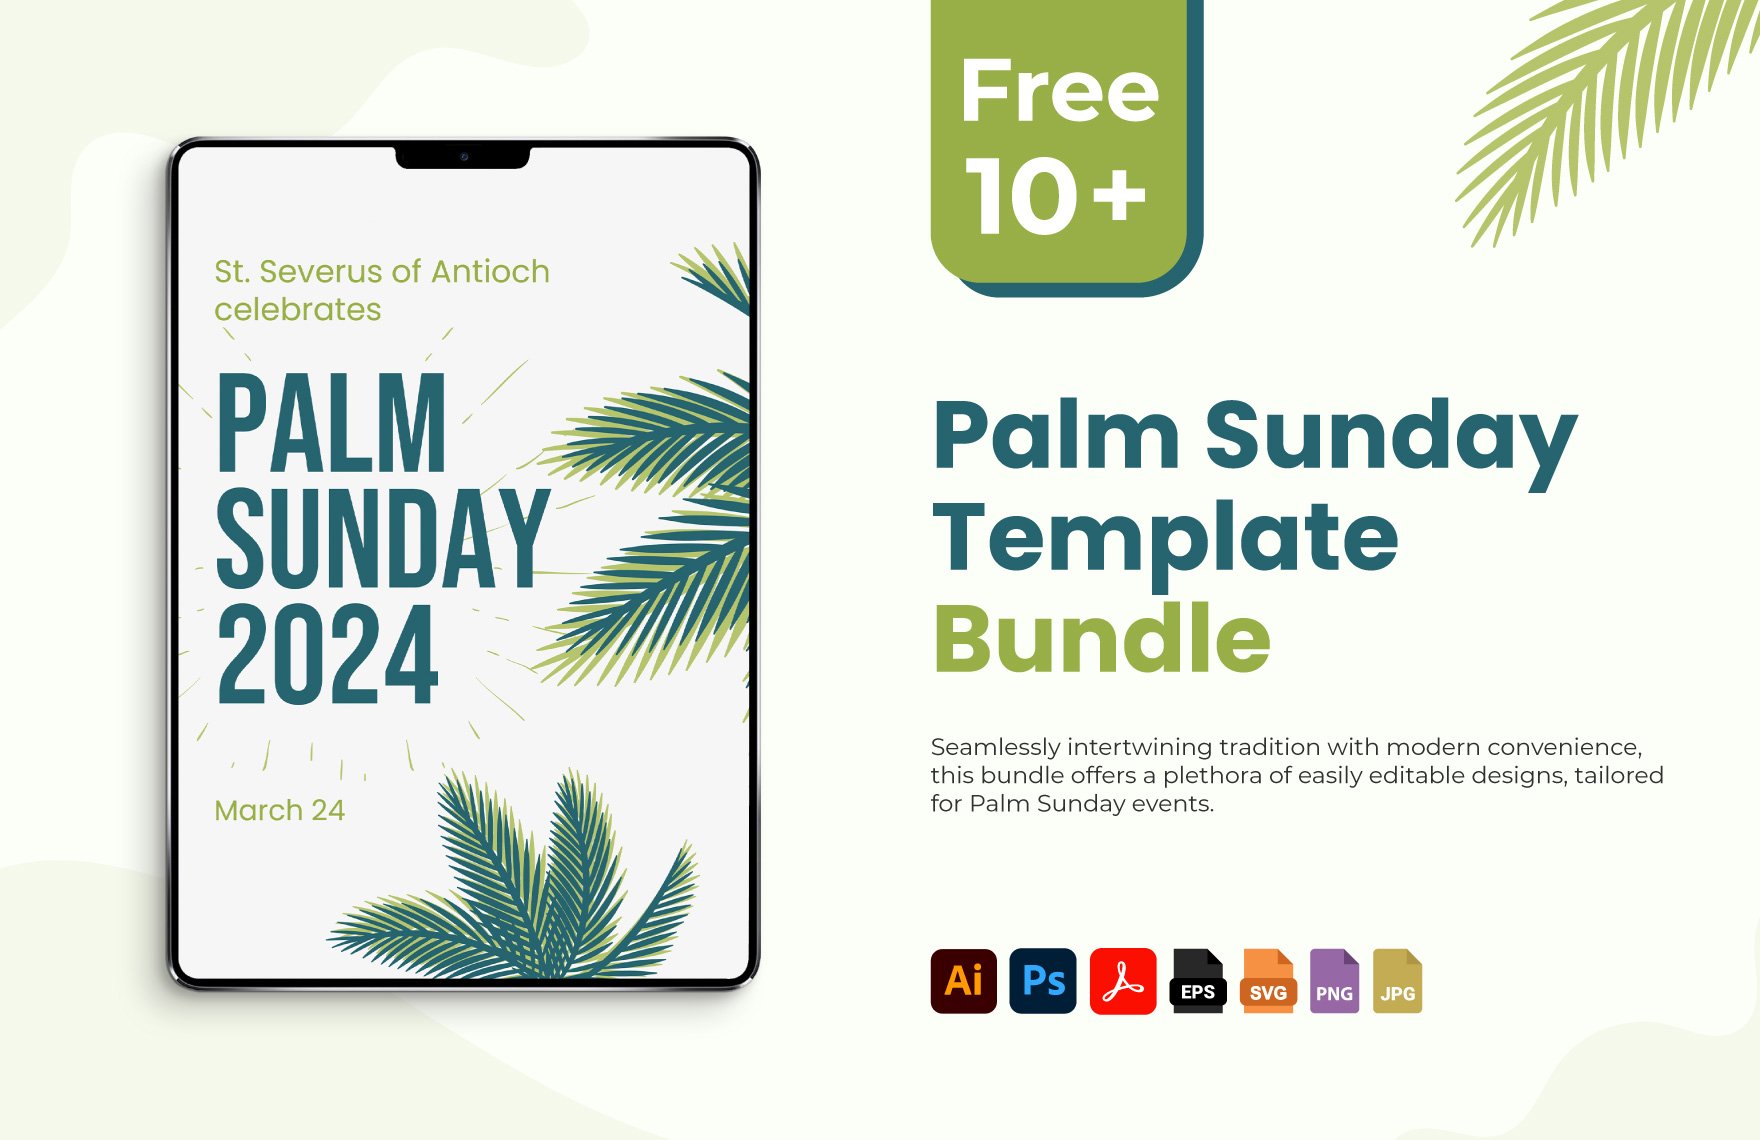 Free 10+ Palm Sunday Template Bundle in PDF, Illustrator, PSD, EPS, SVG, JPG, PNG